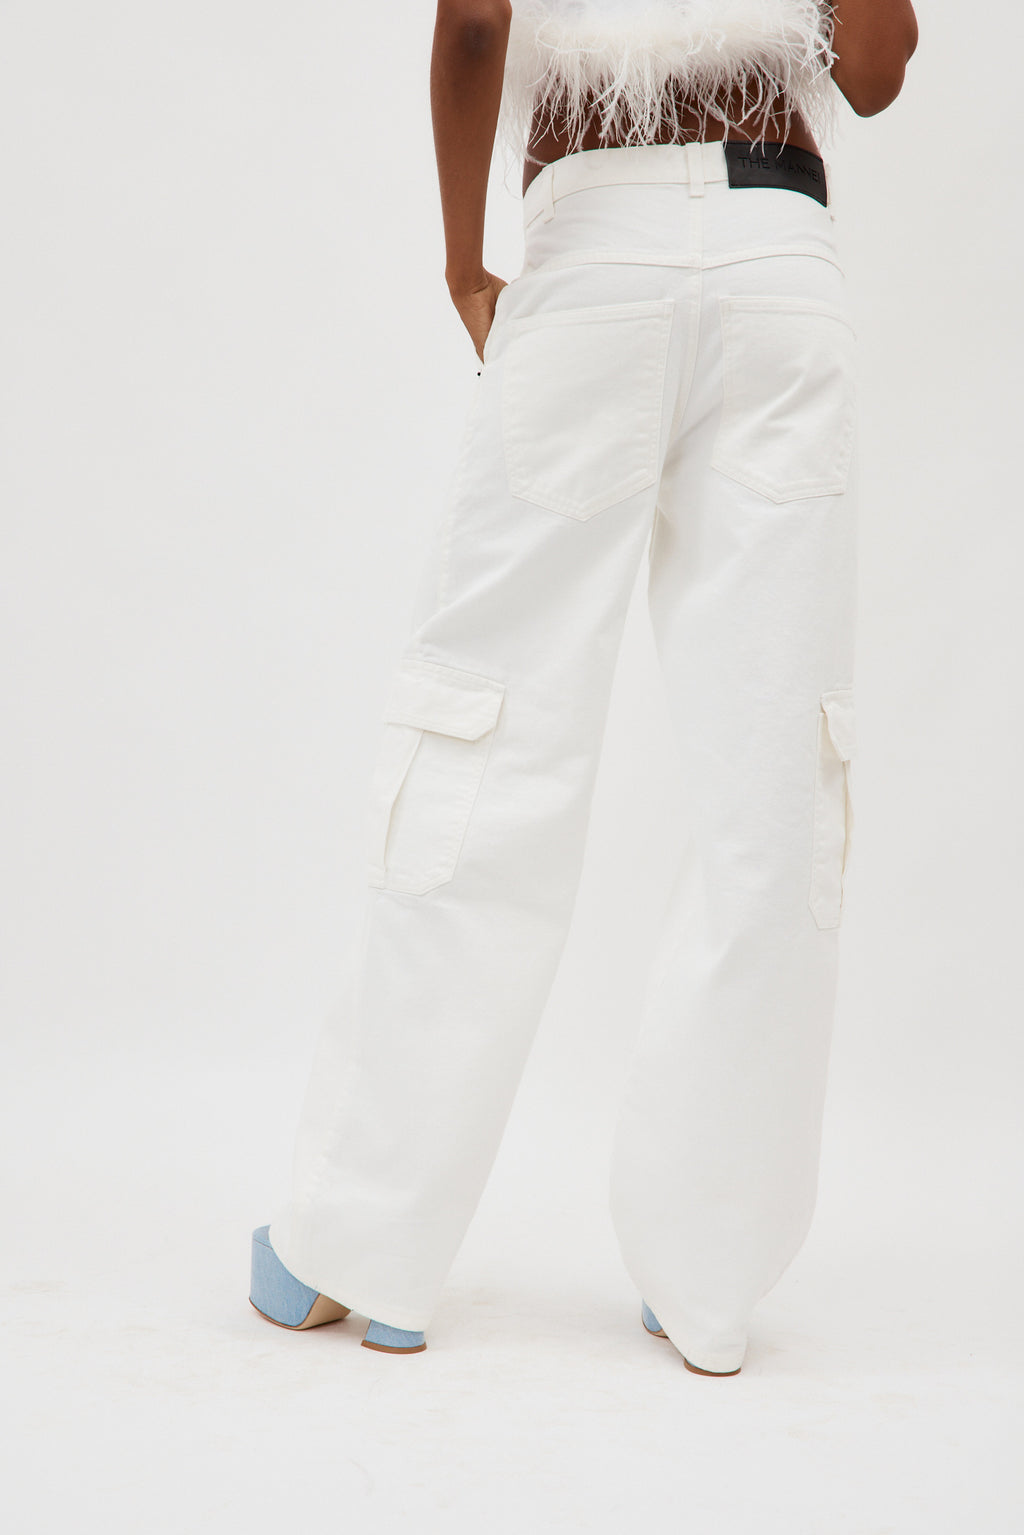 Sado White Jeans